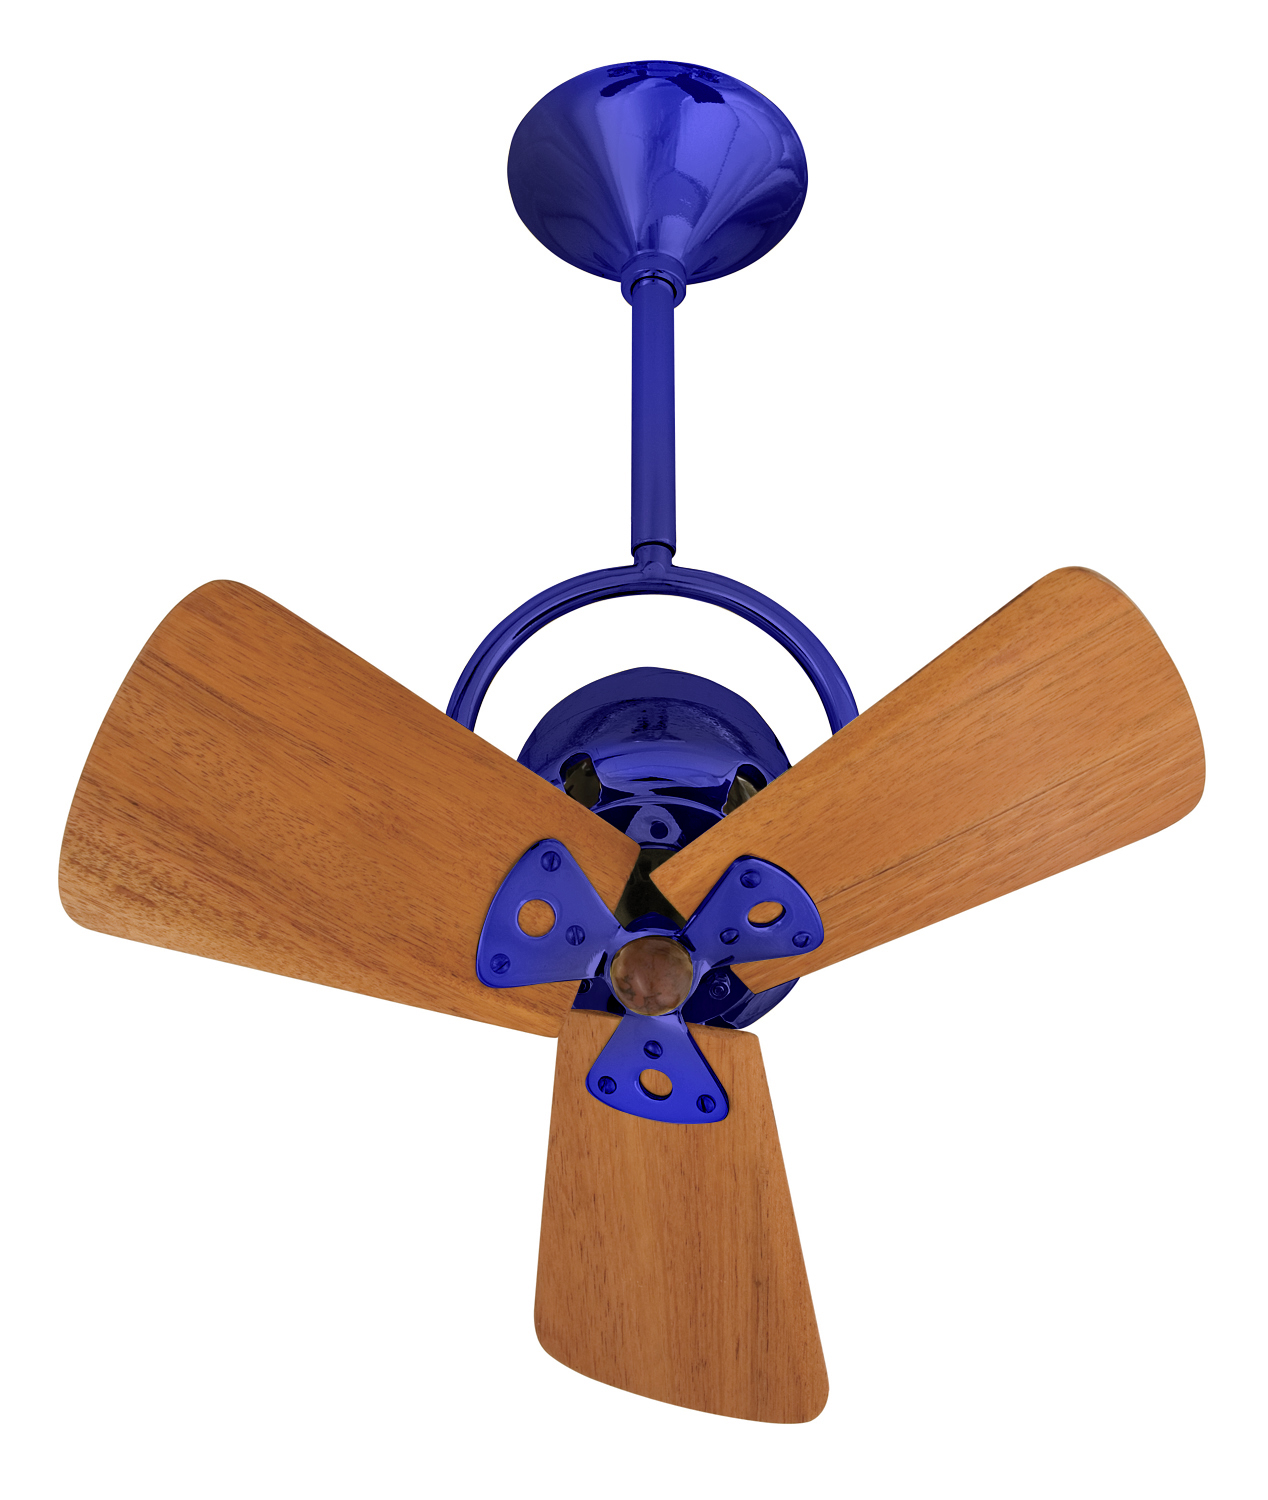 Bianca Direcional ceiling fan in Blue / Safira with mahogany wood blades by Matthews Fan Company.